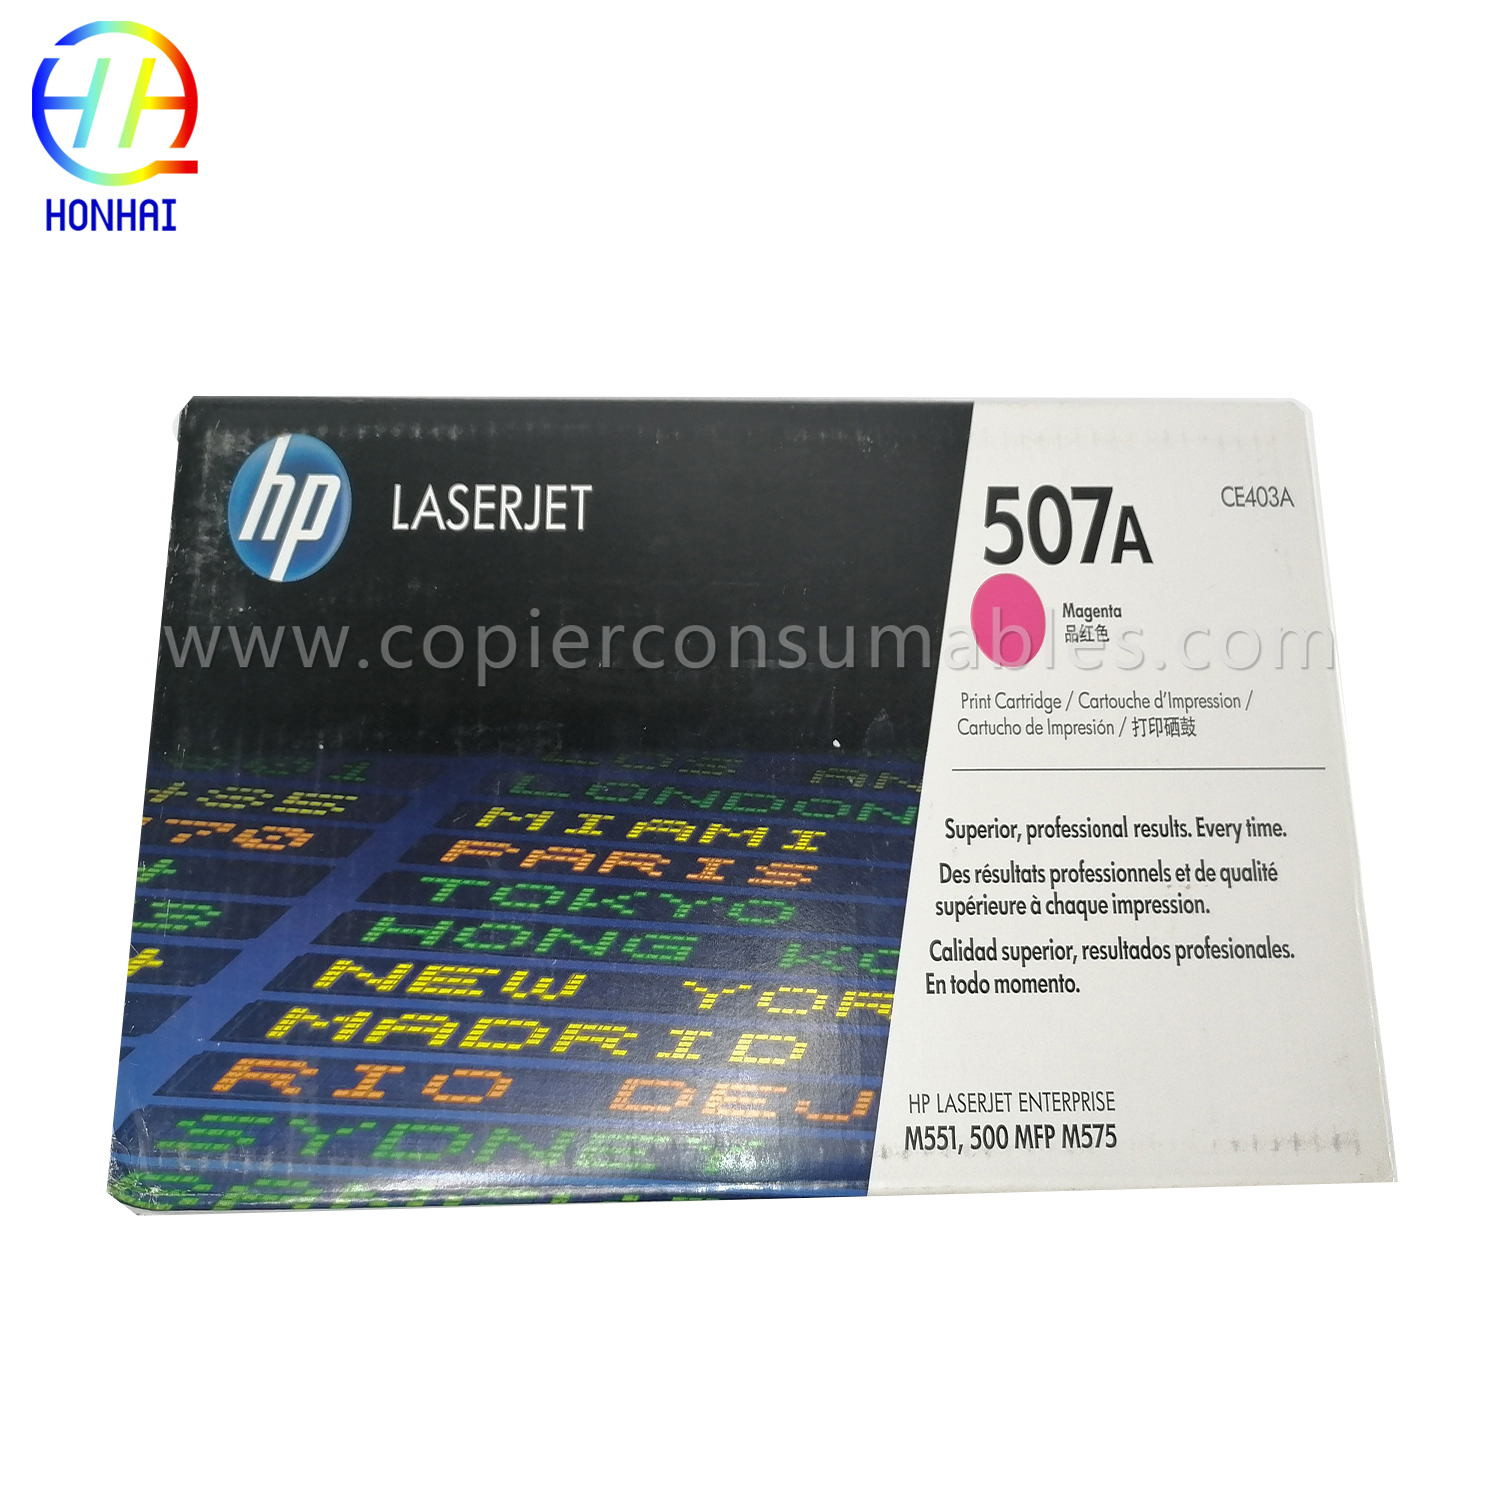 HP HP 507A CE400ACE401ACE402ACE403A M575dn,M575f,M575c,M570dn,M570dw,M551dn,M551n,M551xh(3) için mürekkep kartuşu (set)